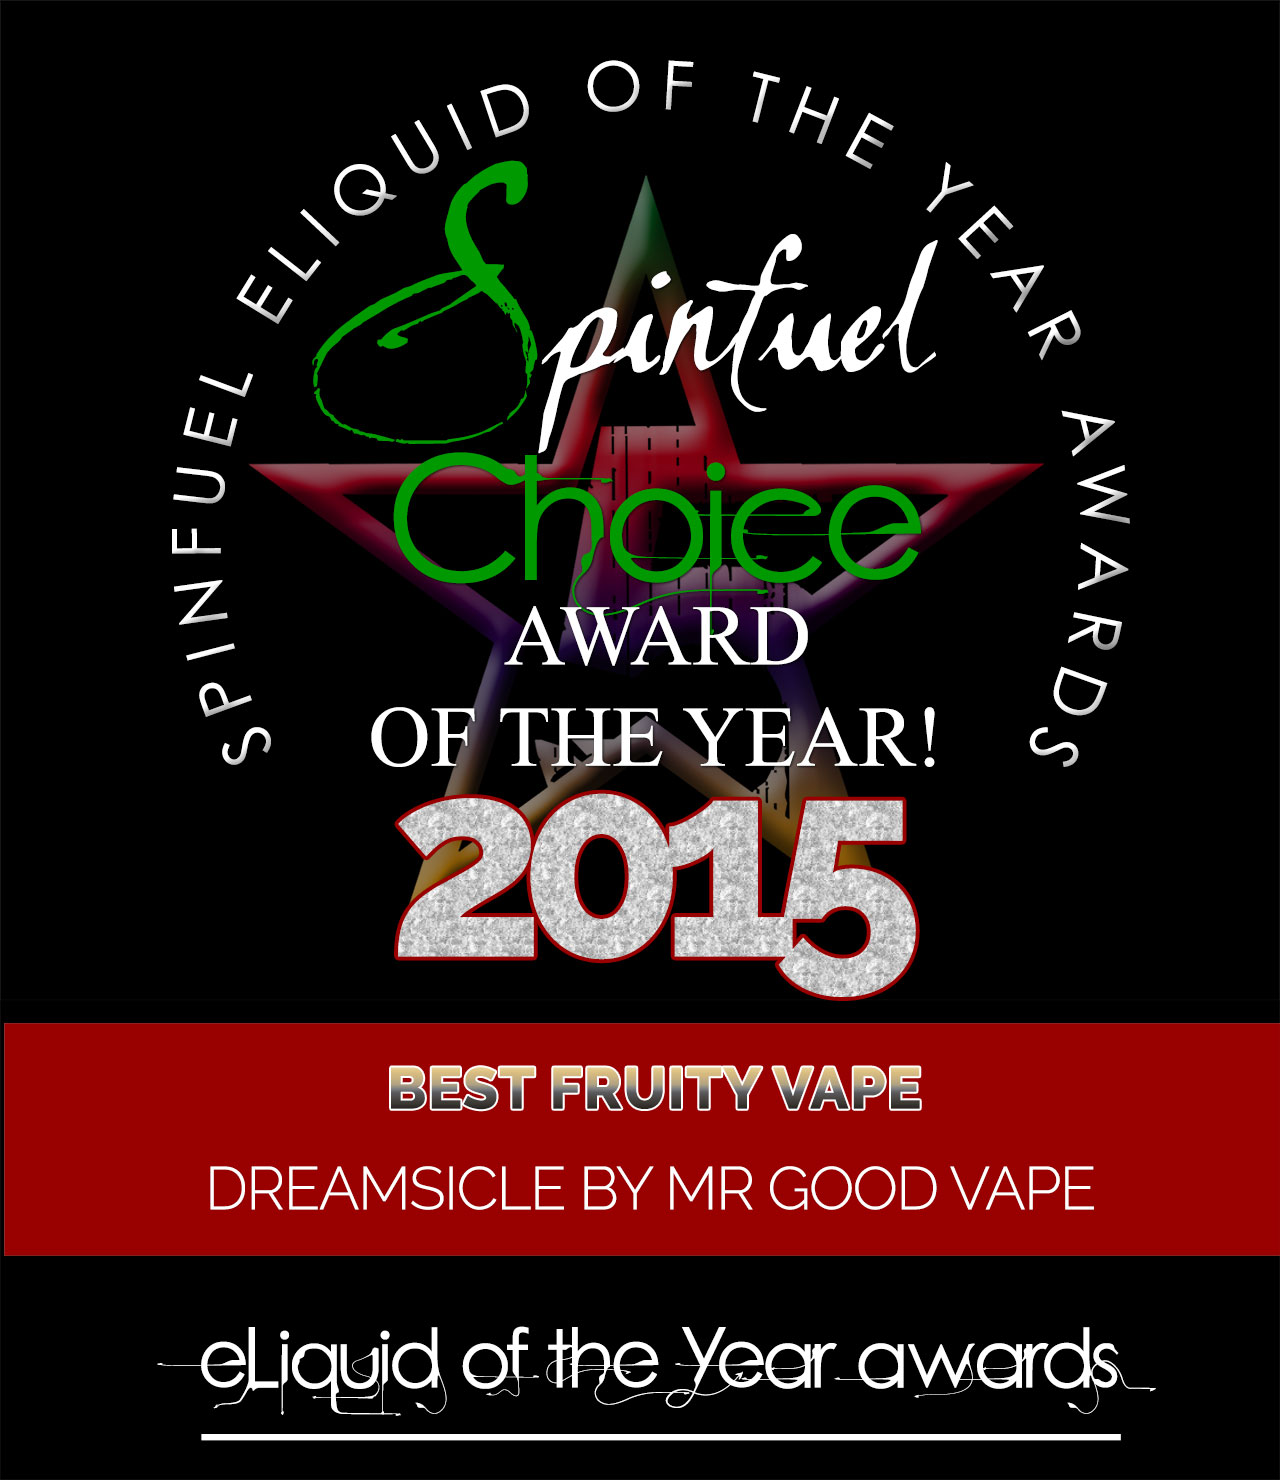 FRUITY-DREAMSICLE Spinfuel Choice Award 2015